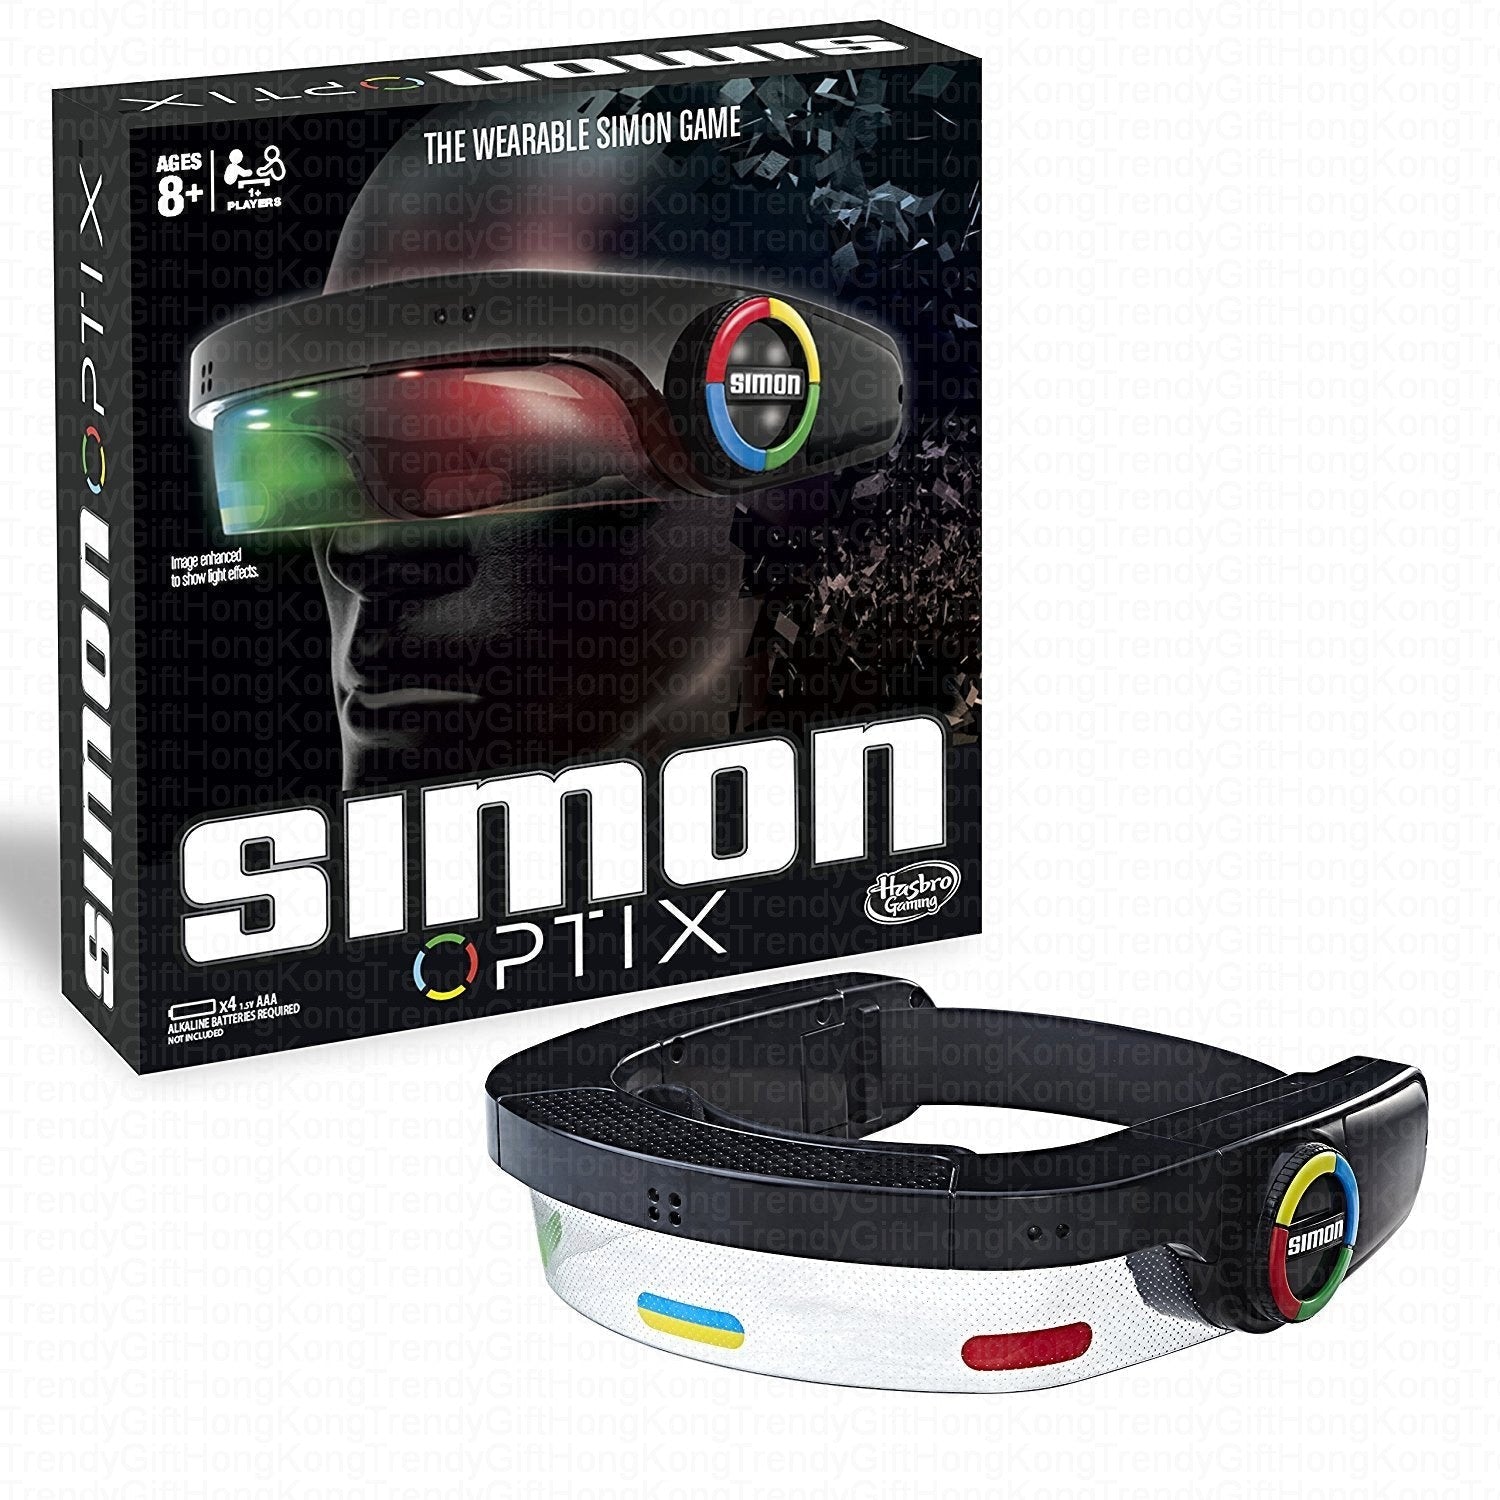 Hasbro Simon Optix VR Game - Next-Level Memory Challenge trendygifthk